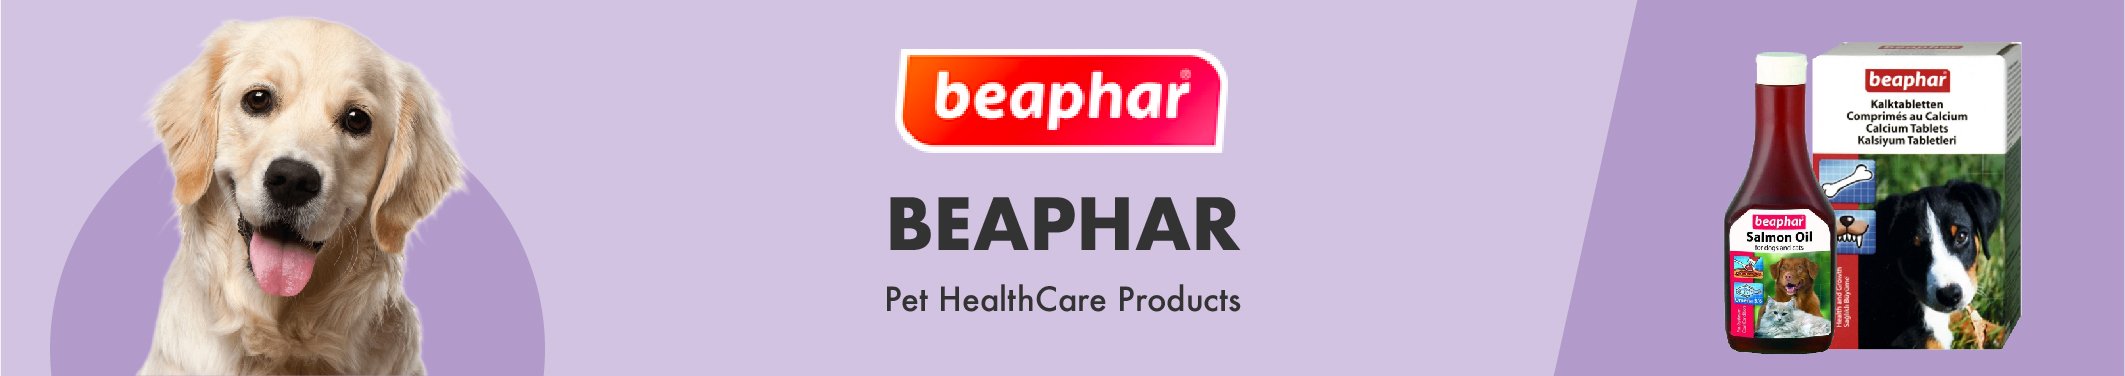 Beaphar Pet Products, Best Pet Supplements Online in India